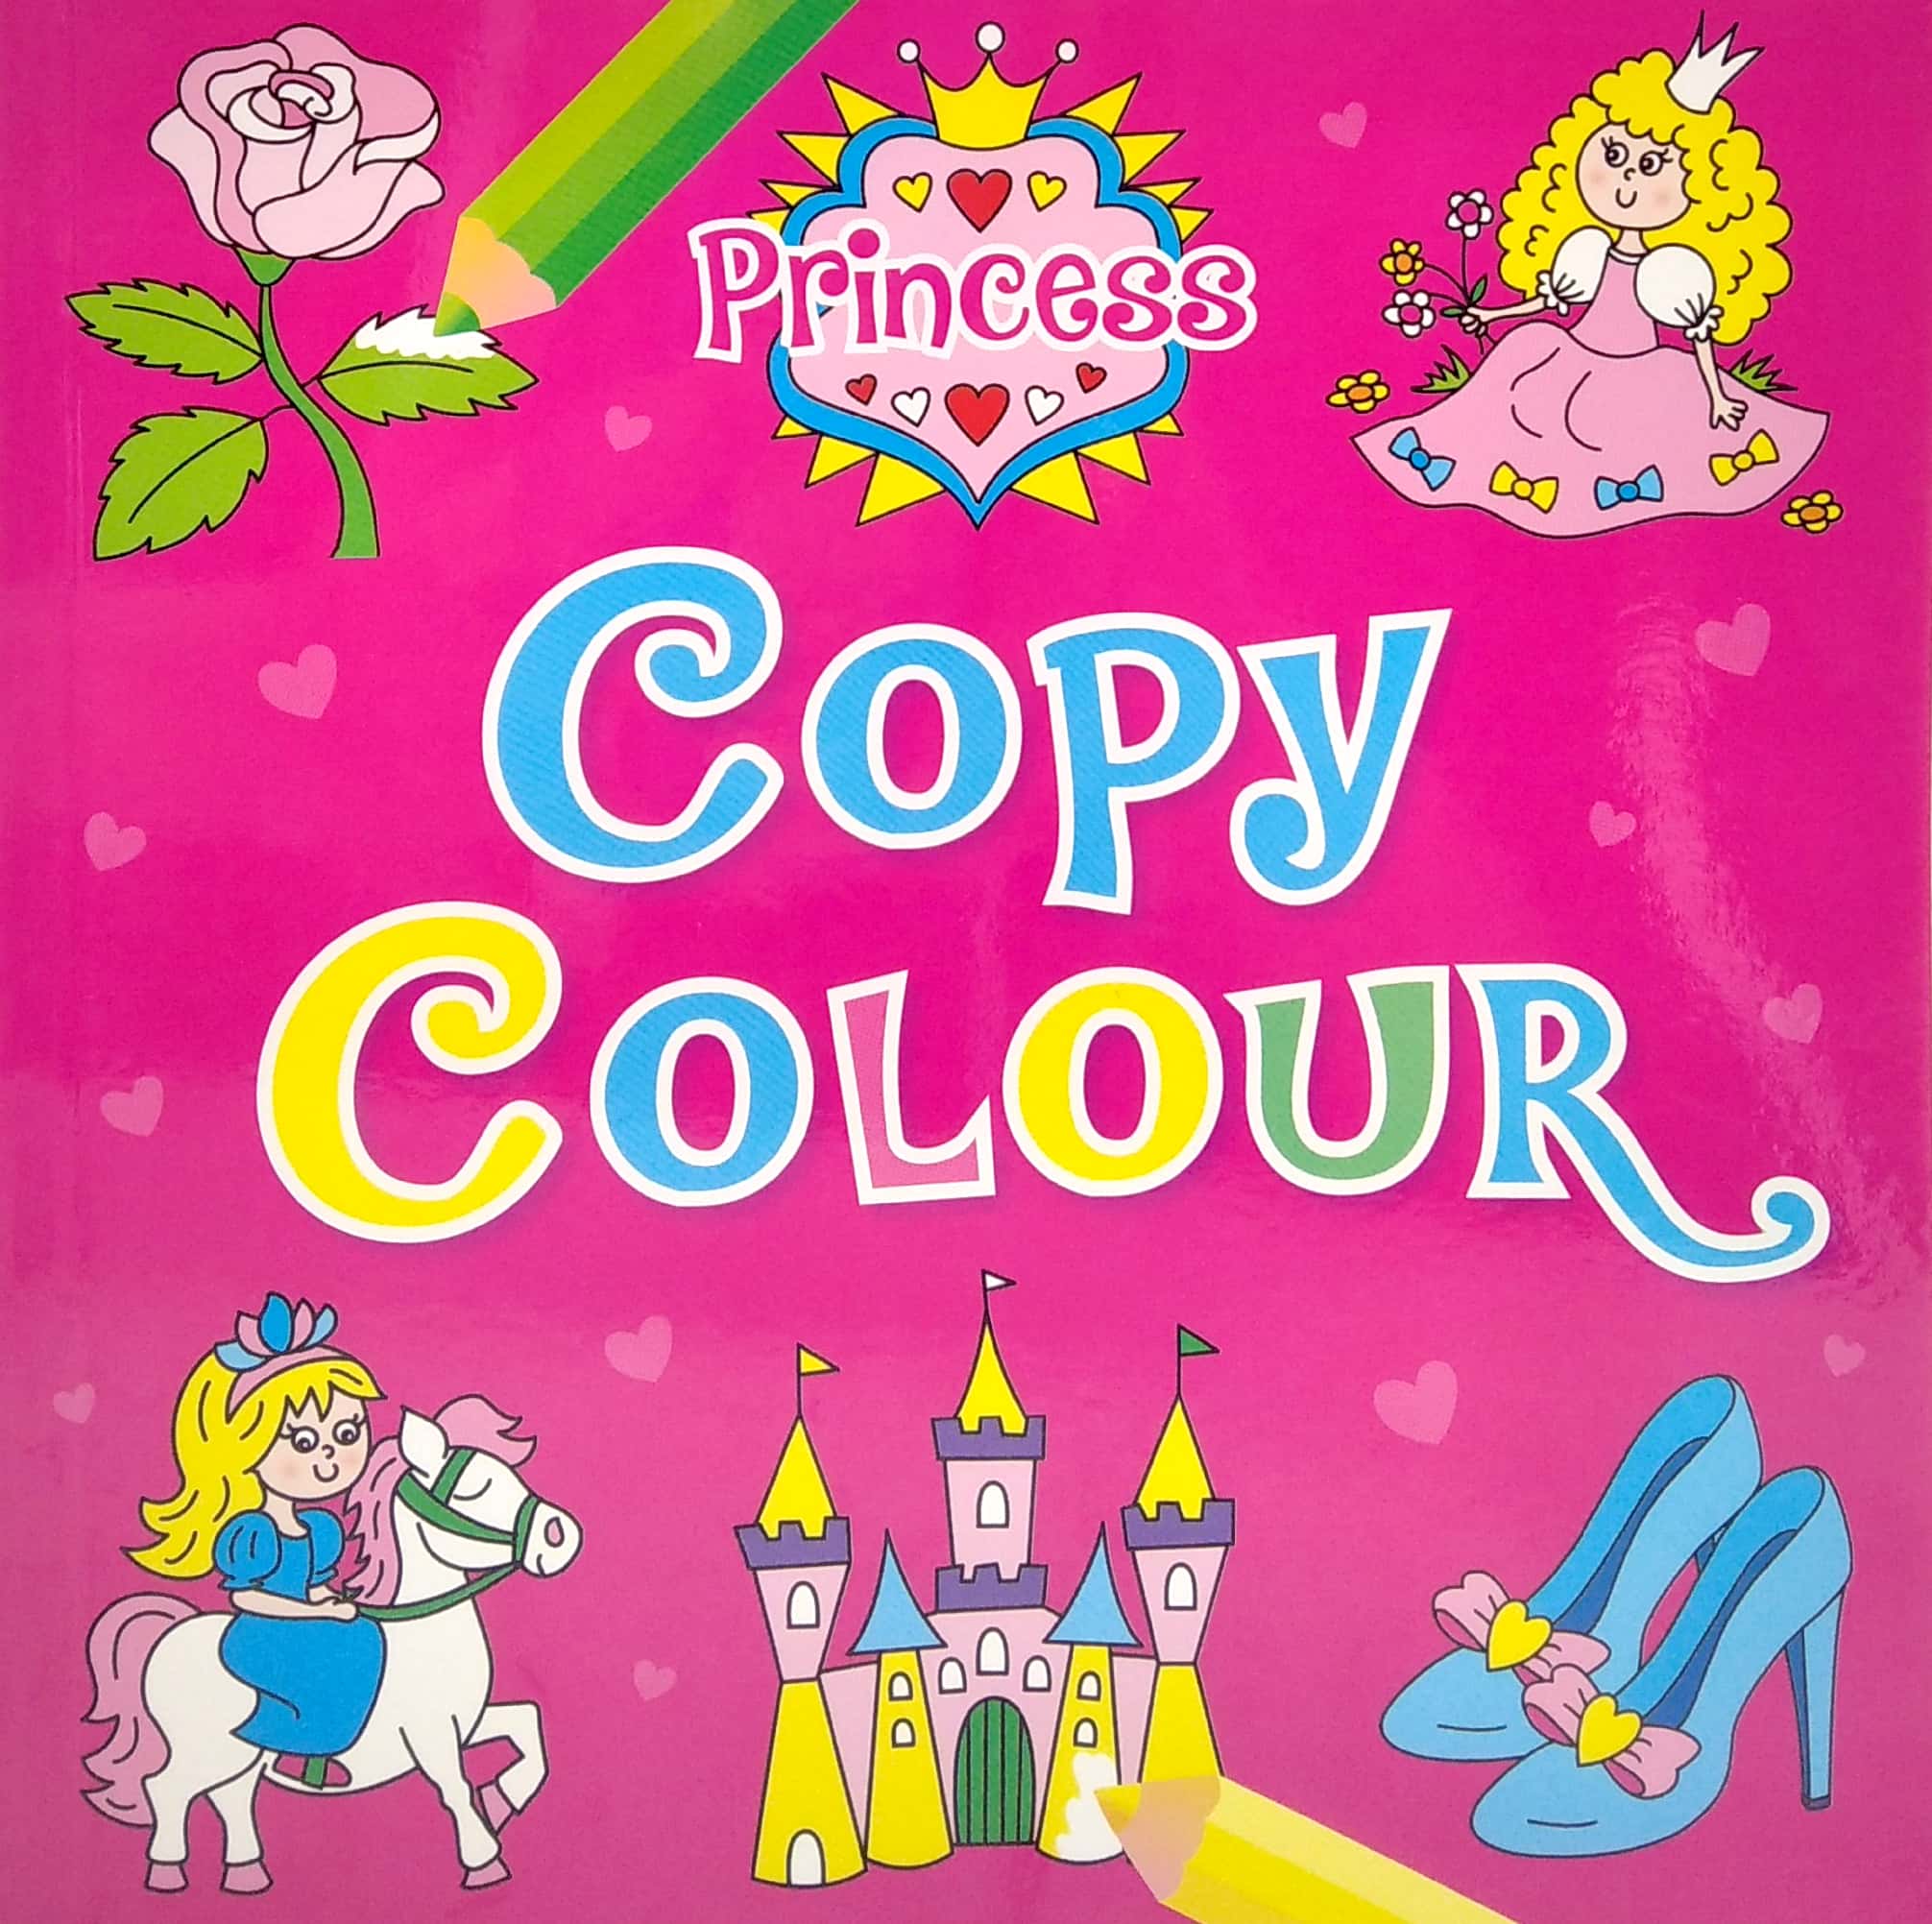 Princess Copy Colour